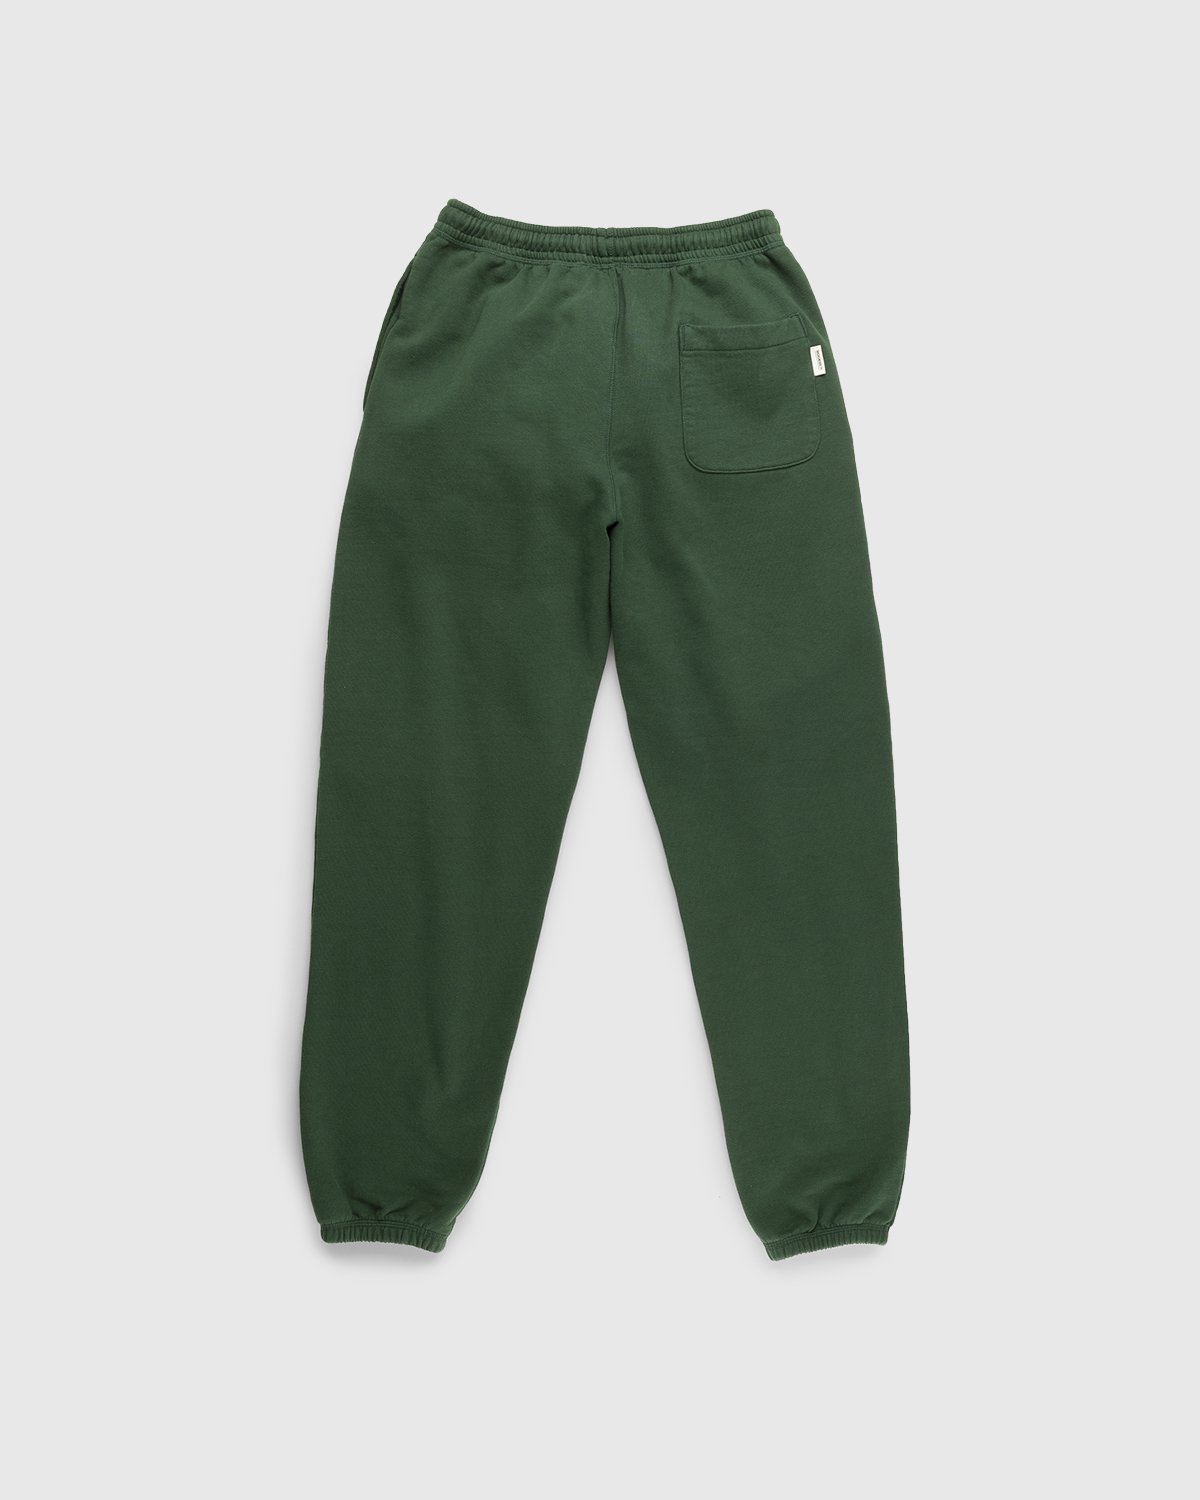 Highsnobiety - Logo Fleece Staples Pants Campus Green - Clothing - Green - Image 2